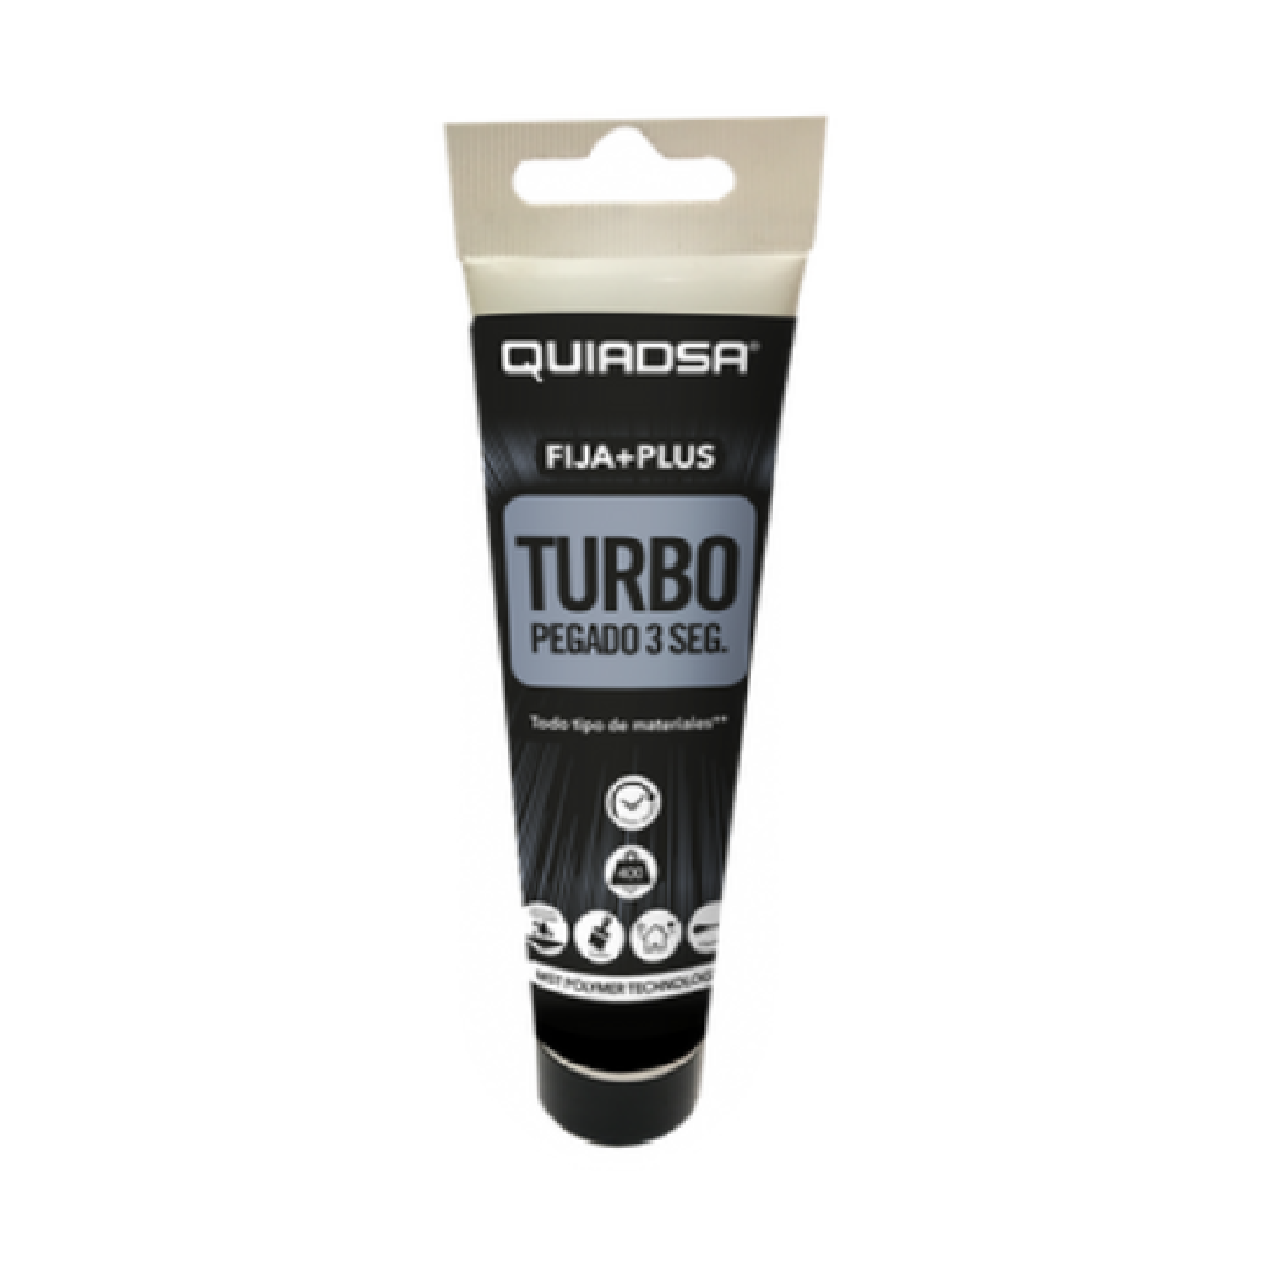 QUIADSA Fija+Plus TURBO Adhesive Sealant WHITE 125ML